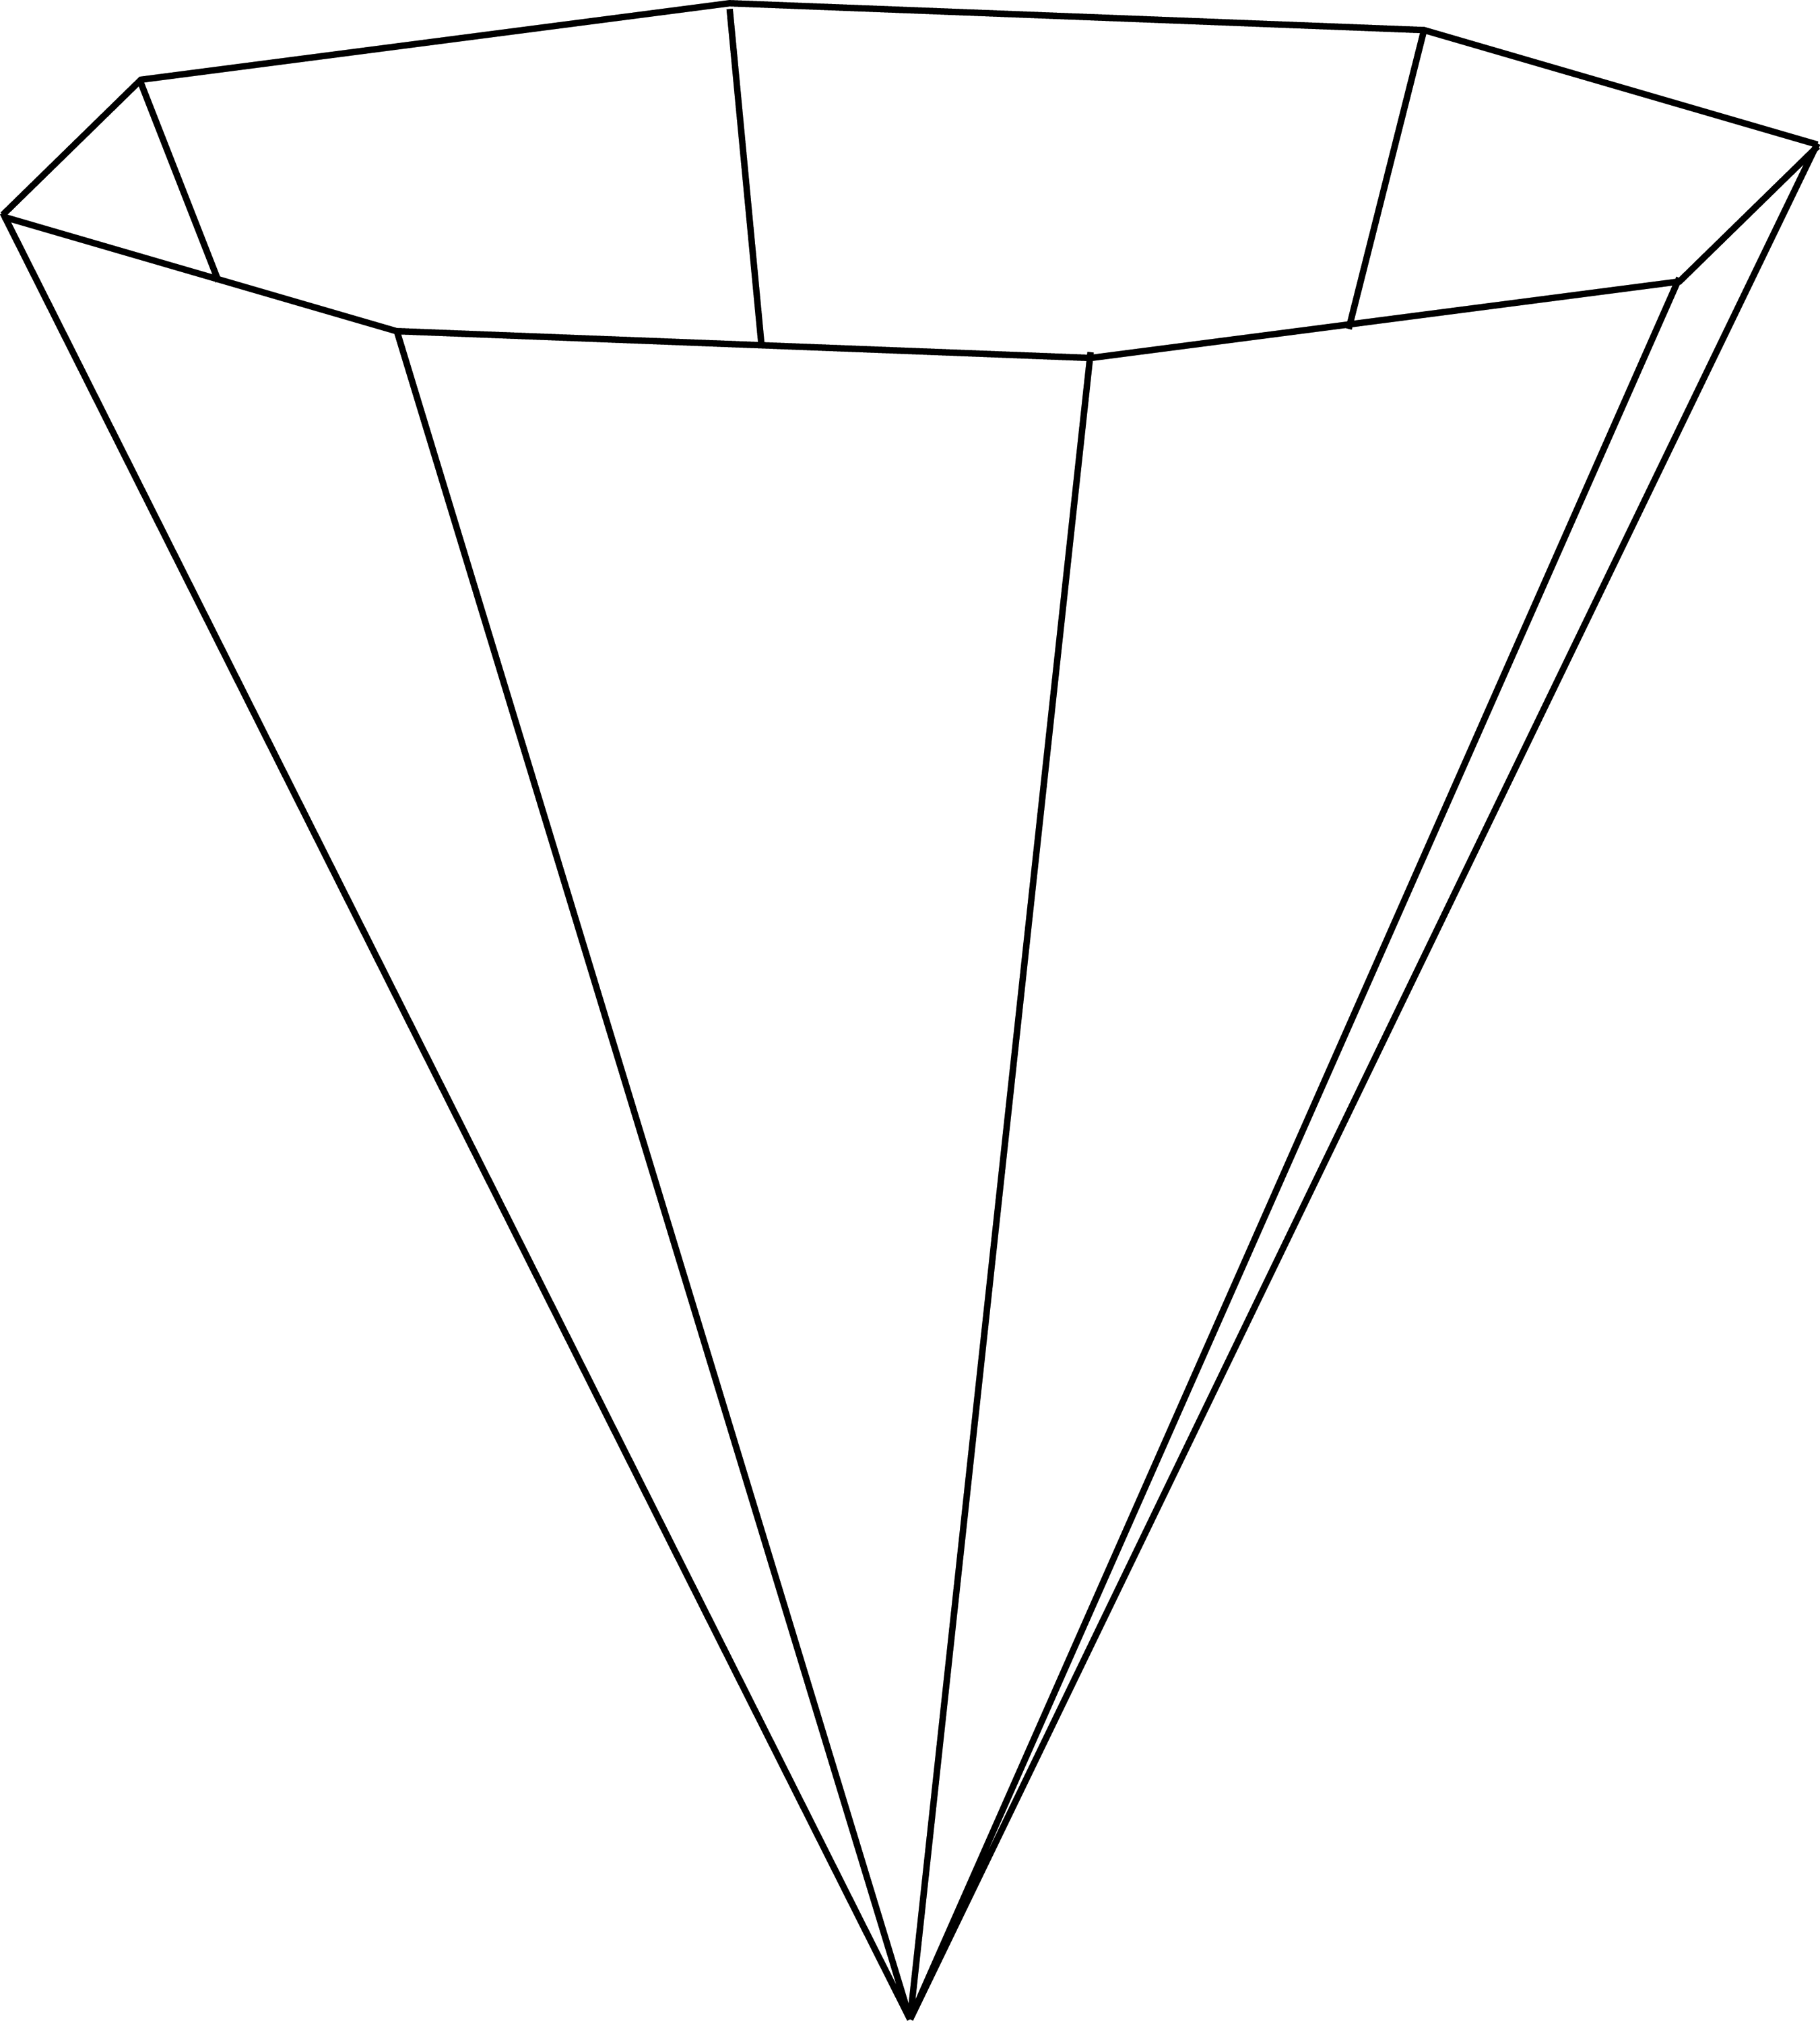 Inverted Octagonal Pyramid | ClipArt ETC